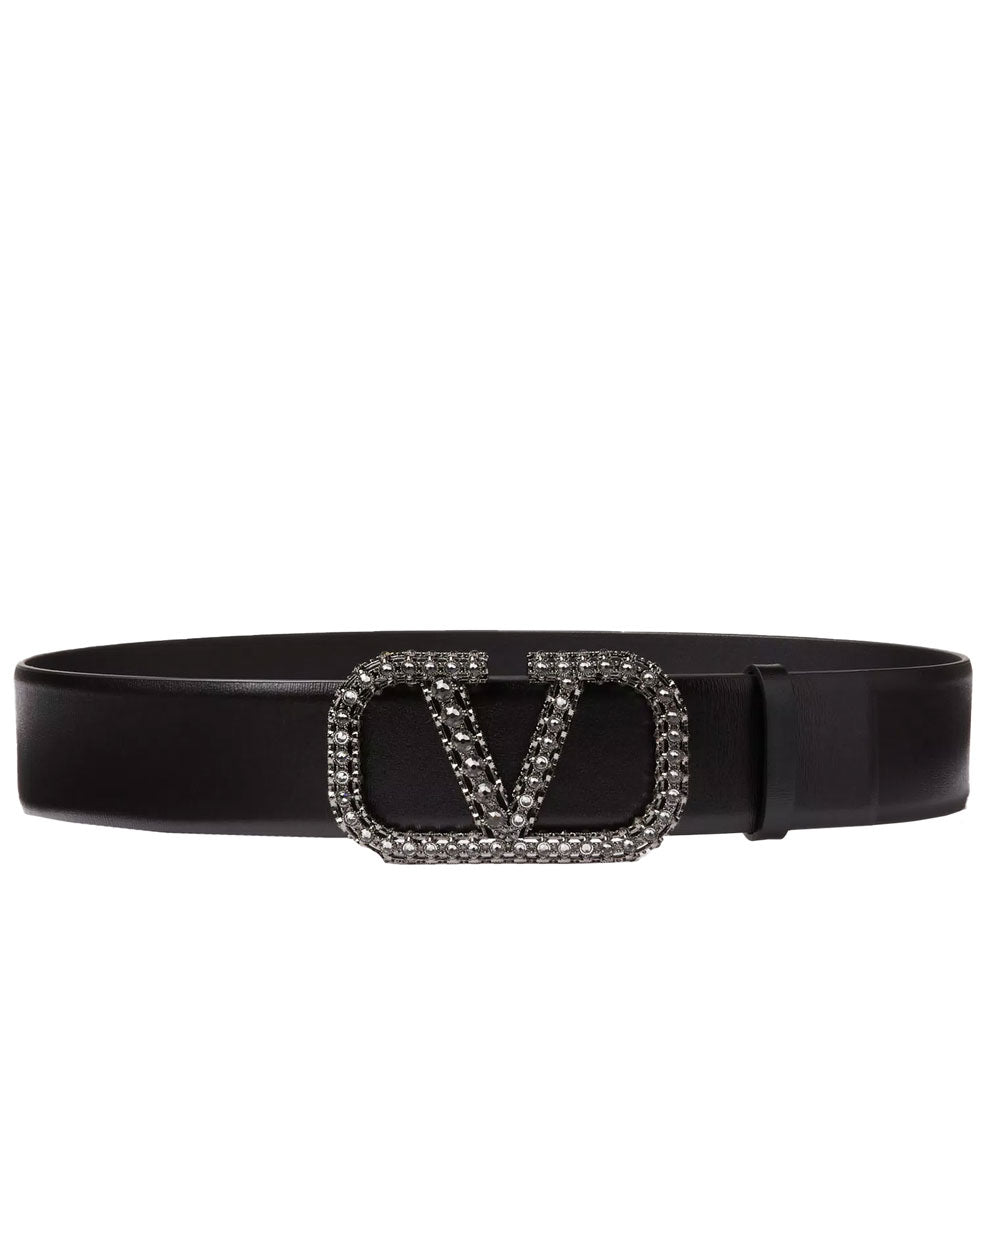 Vlogo Signature Belt in Nero and Black Diamond